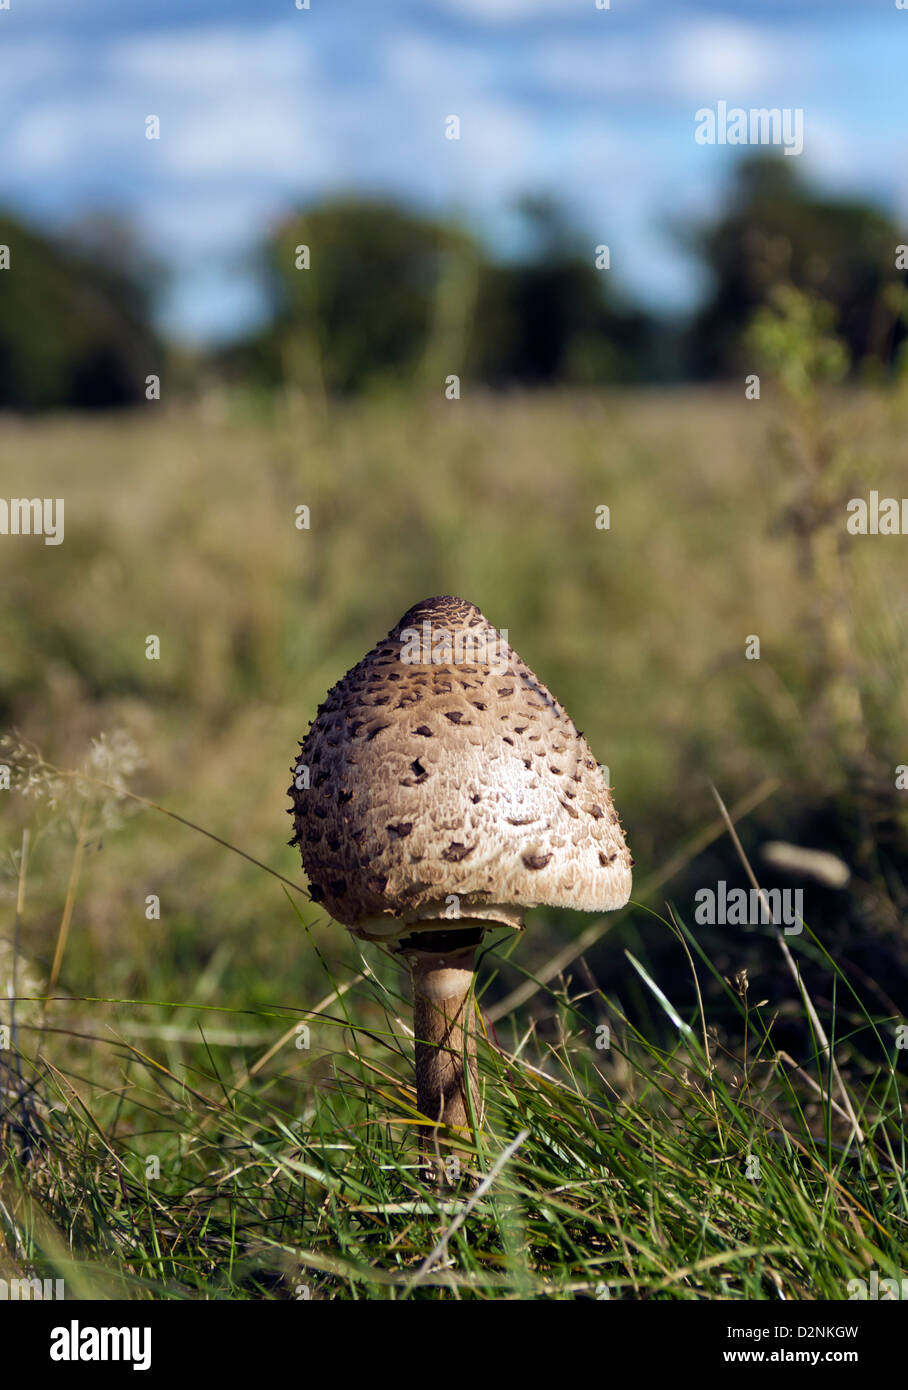 Shaggy Parasol Mushroom in a field of grass Stock Photo